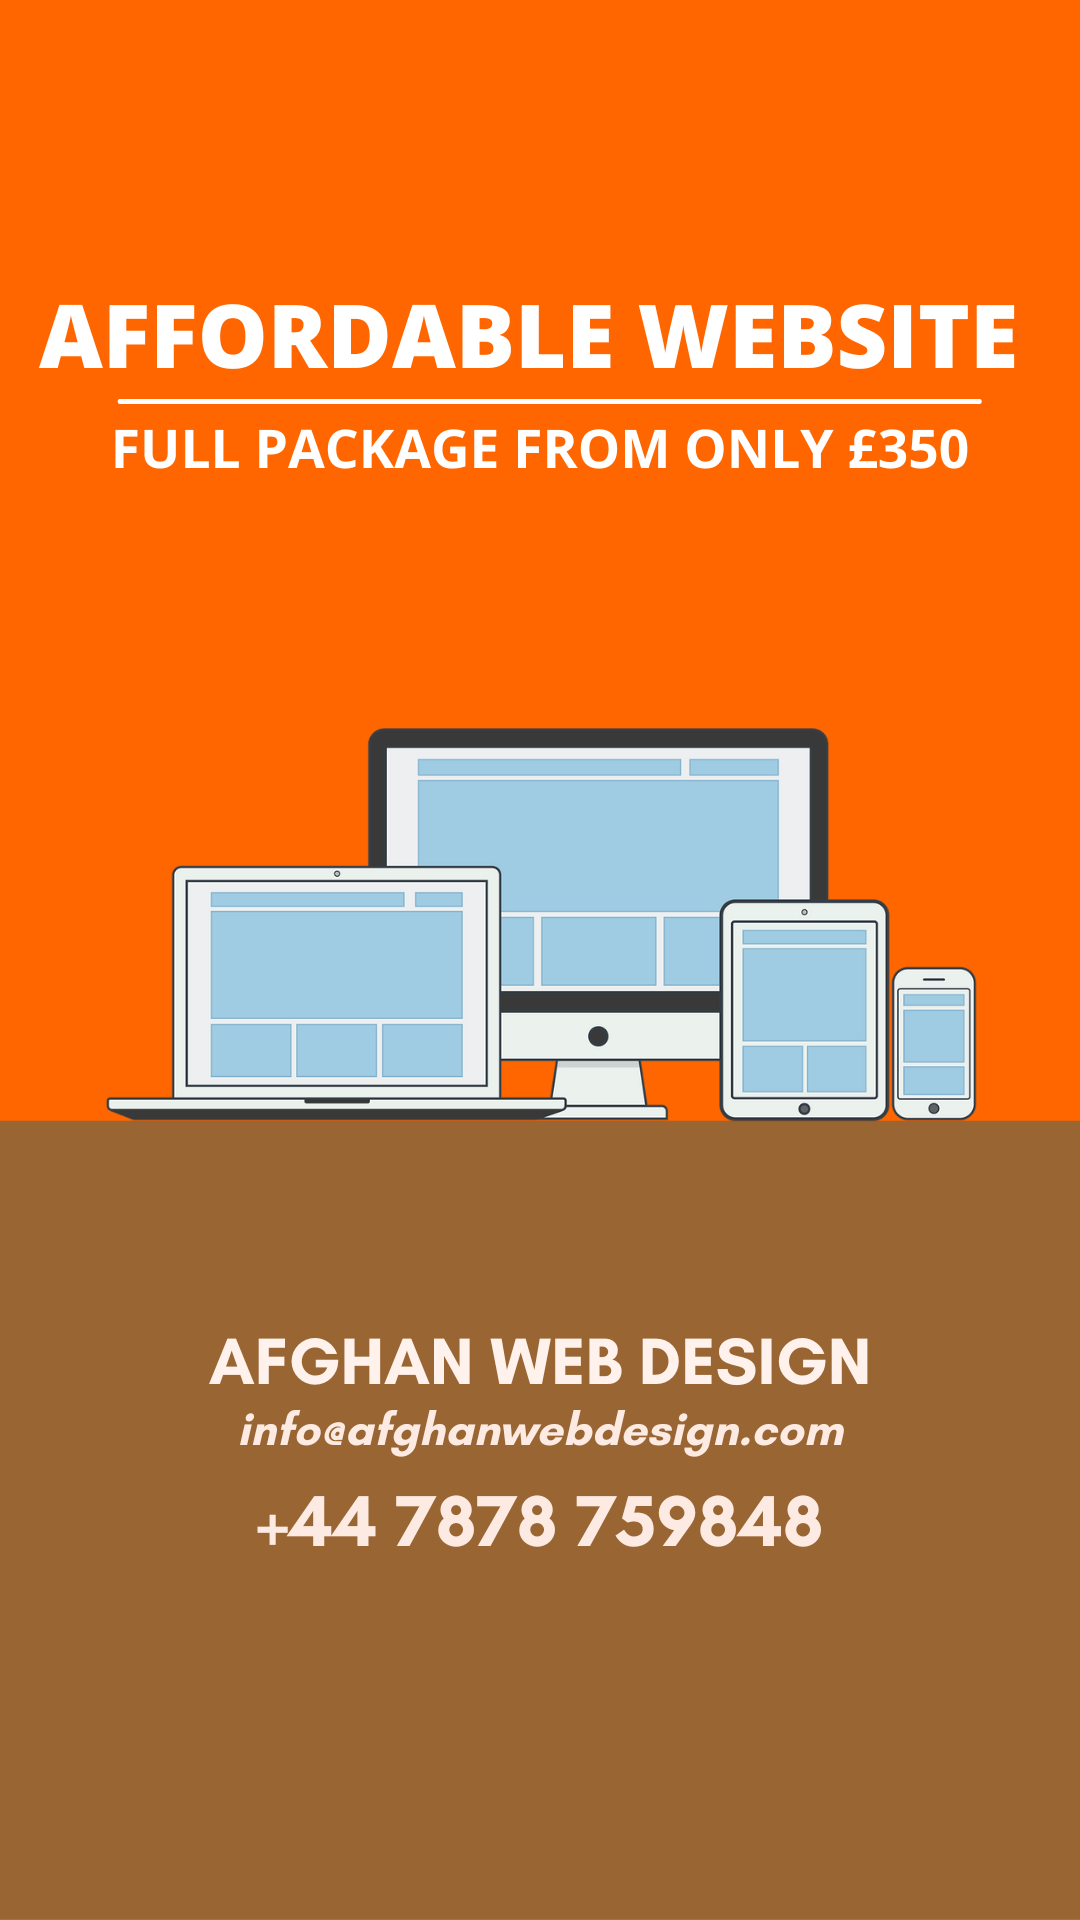 Afghan web design